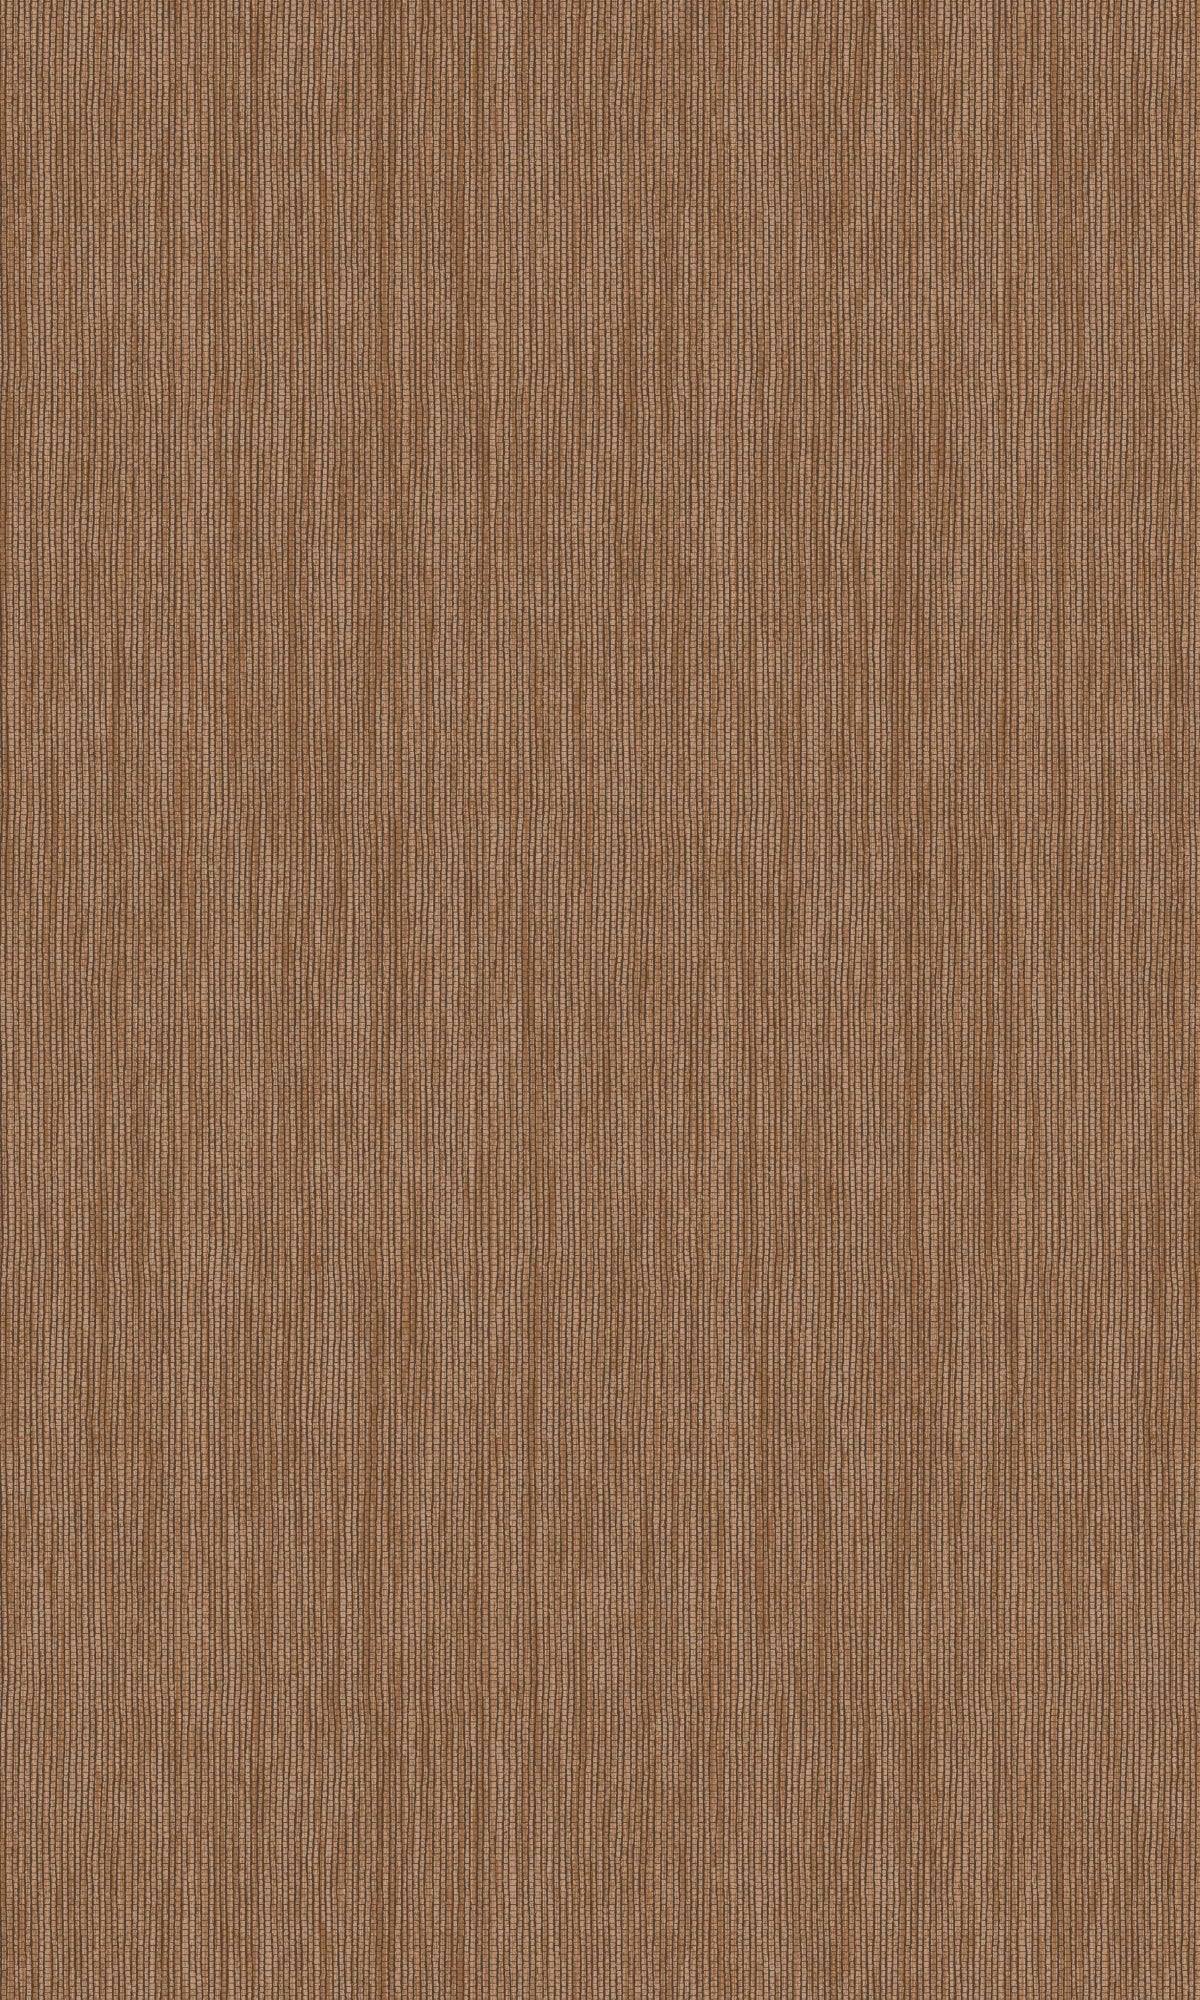 Brown Plain Textile Textured Wallpaper R9075